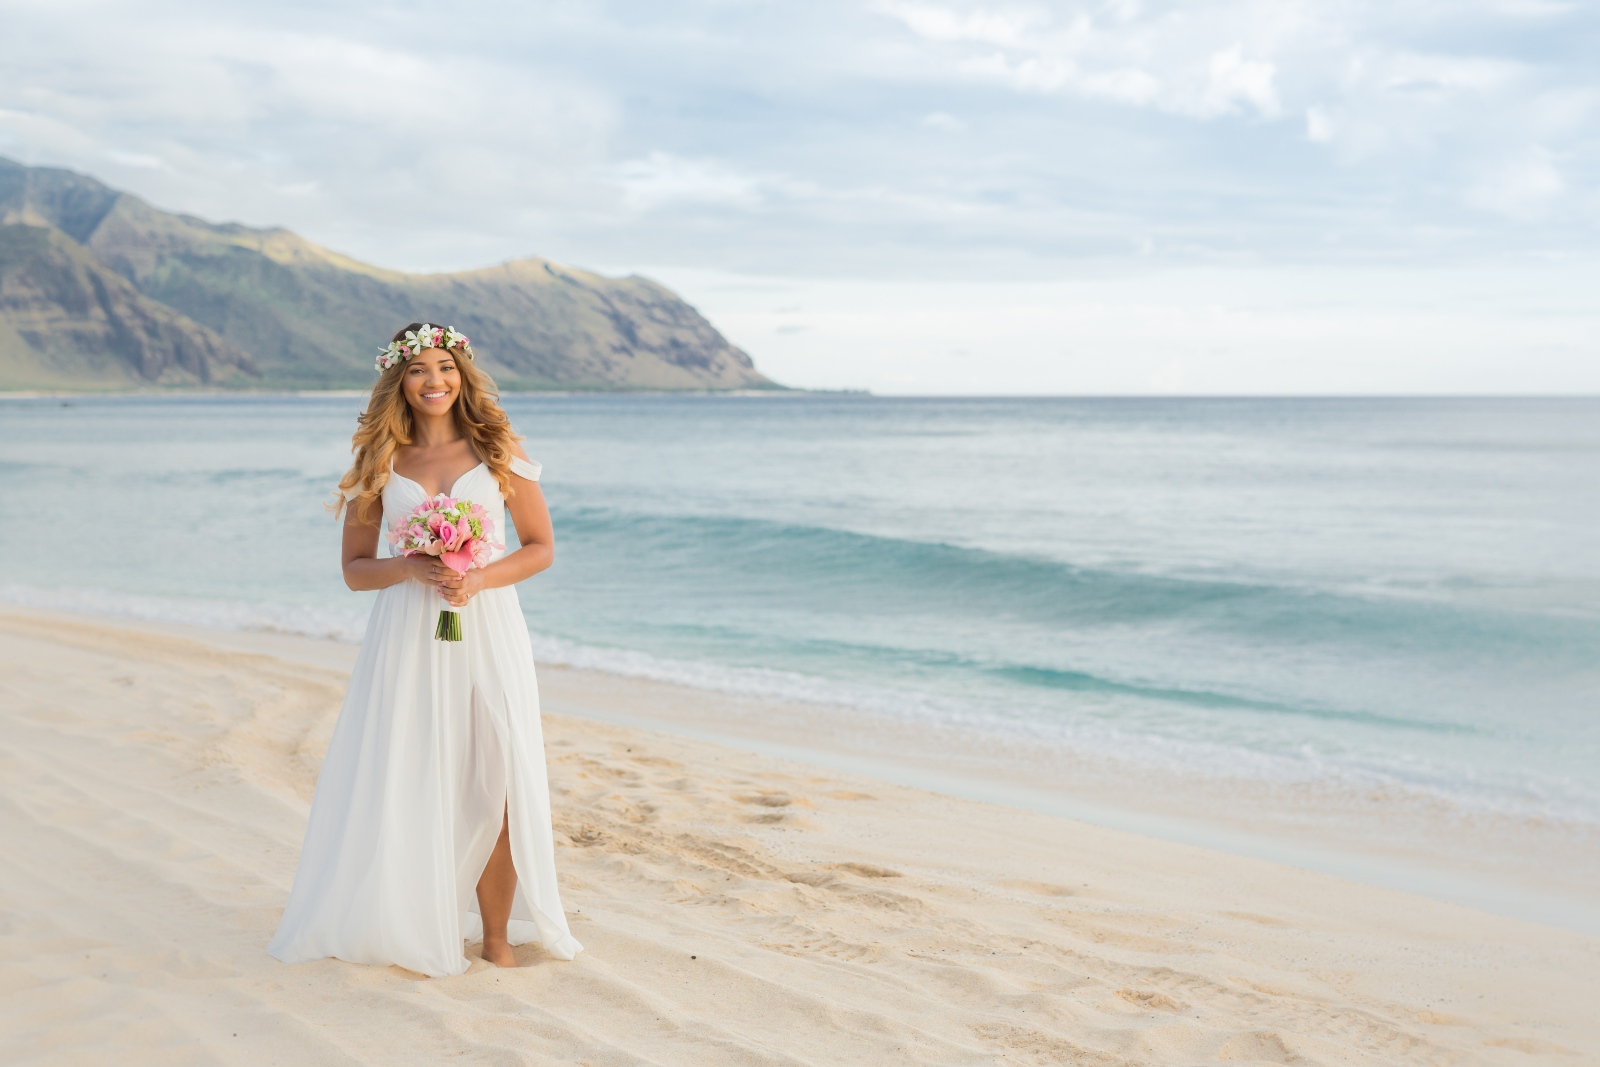 Beach Wedding Flip-Flops for Guests – Beach Wedding Tips